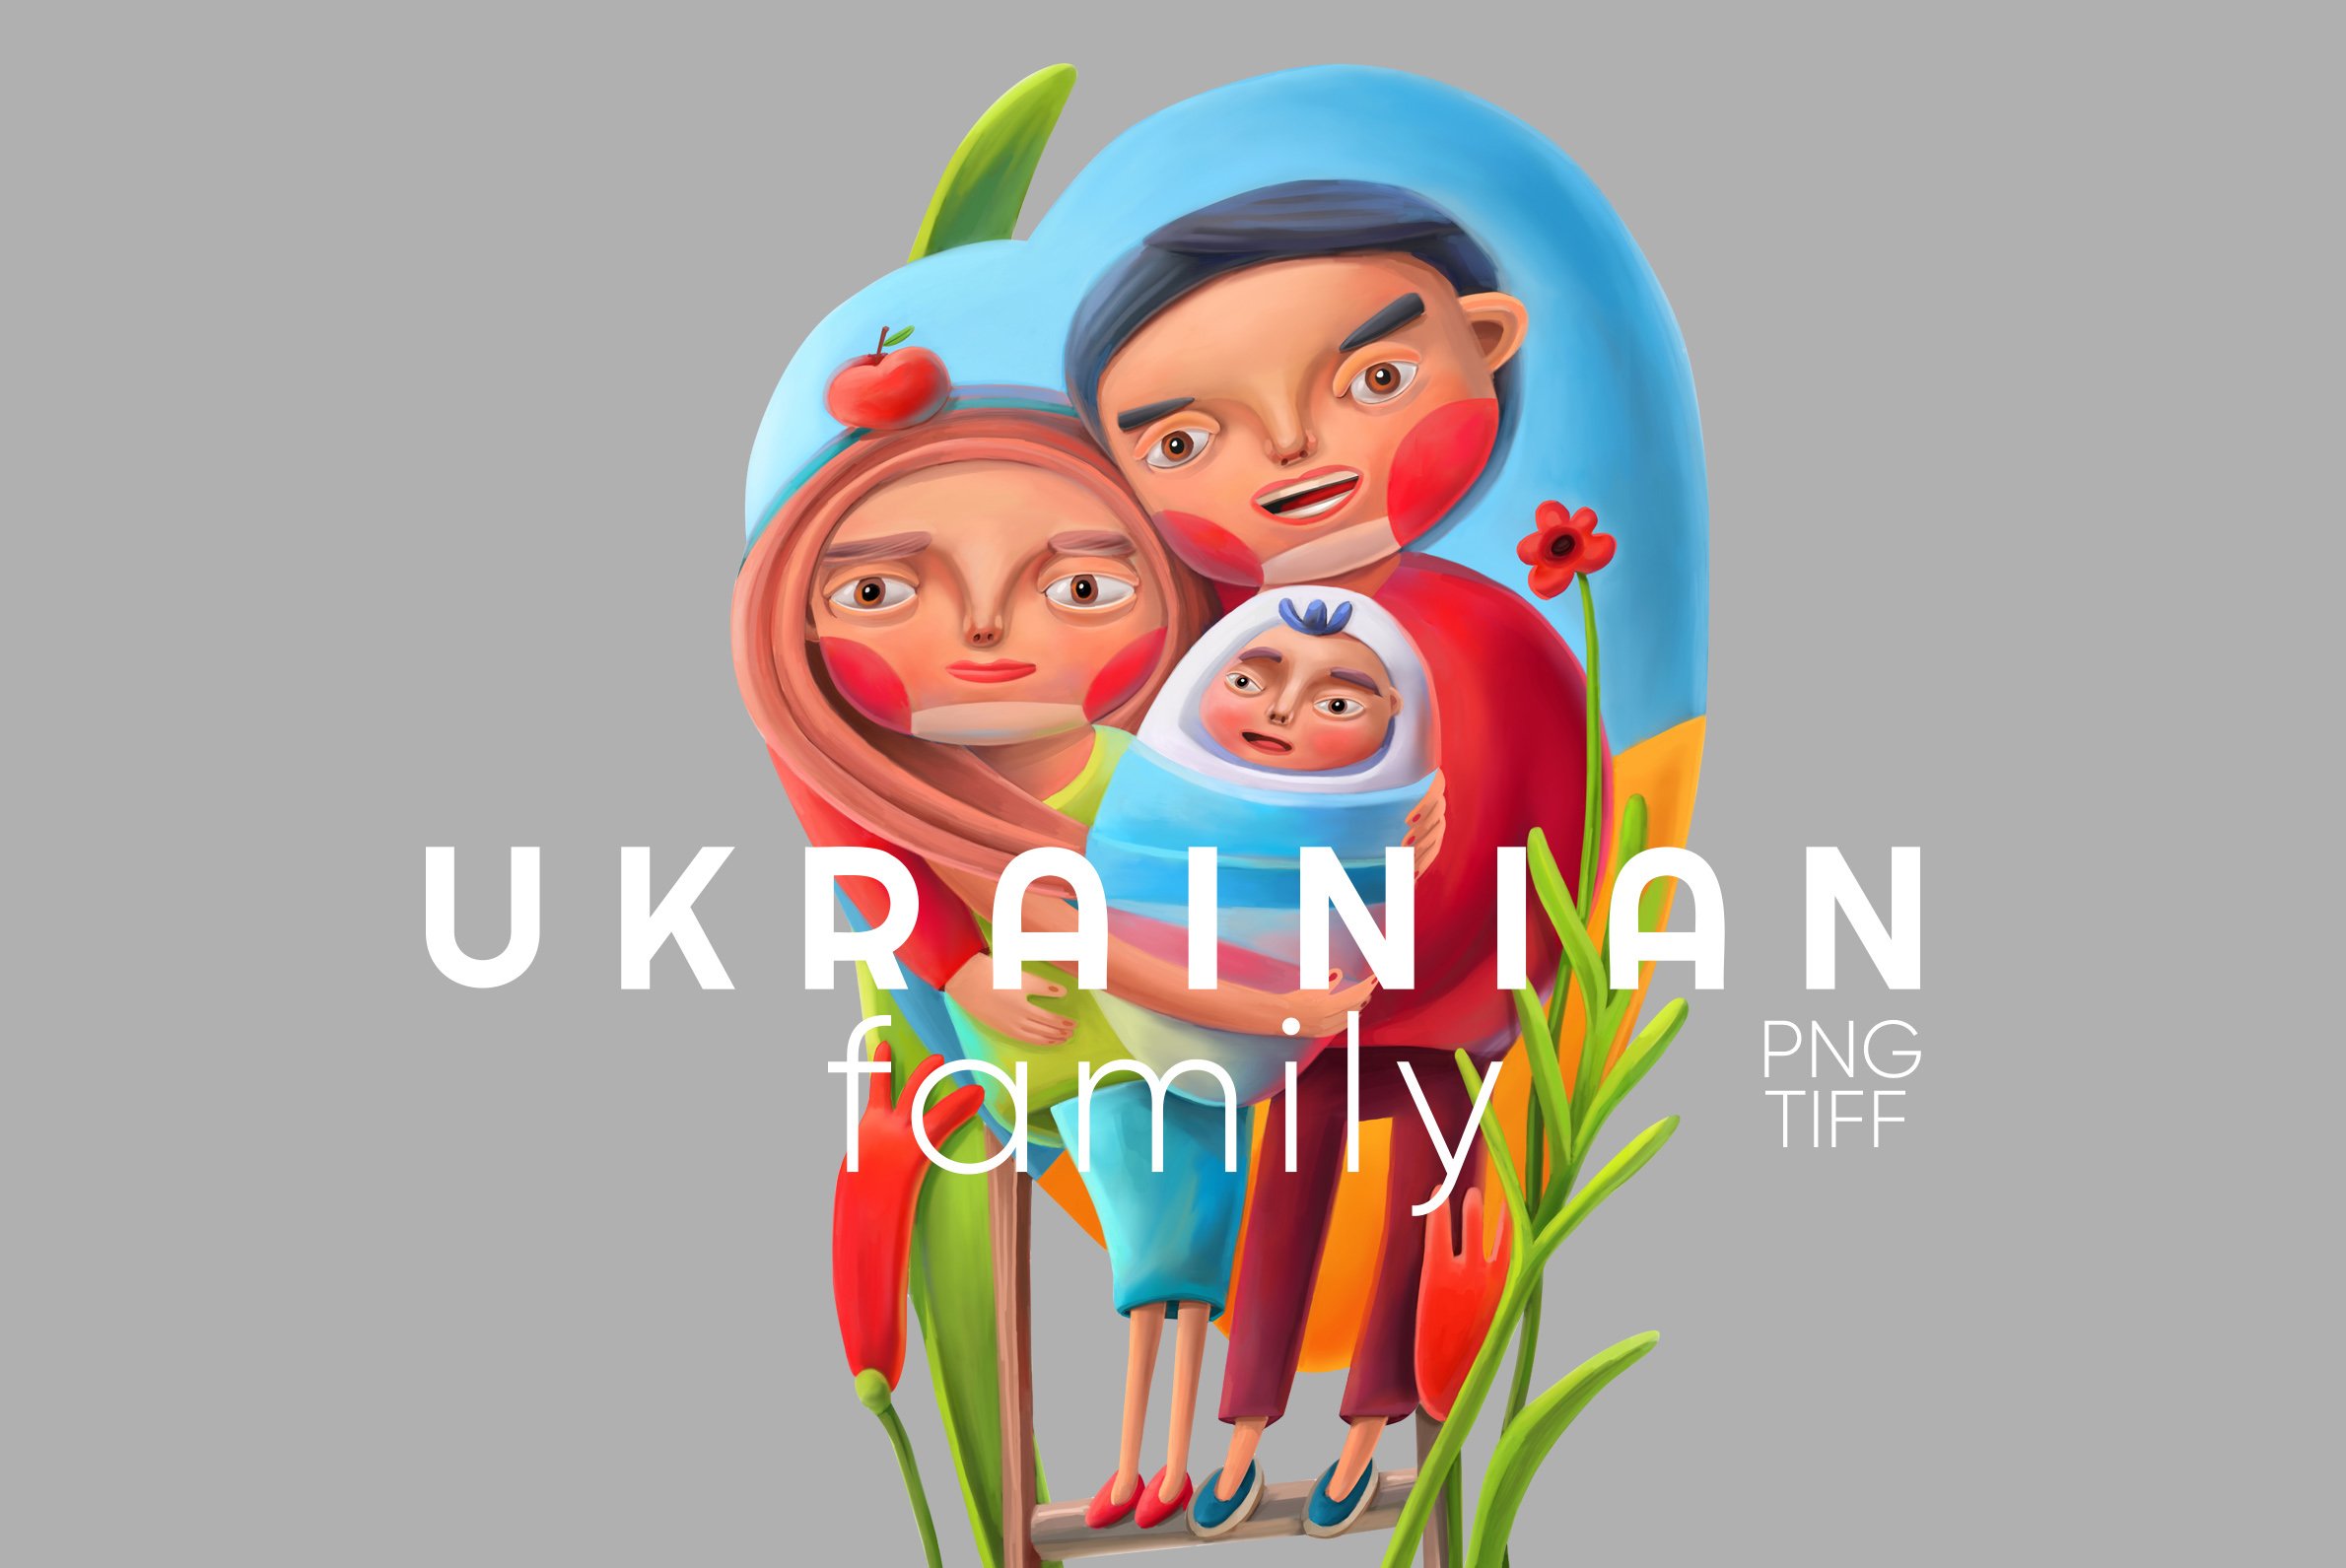 Ukrainian family cover image.